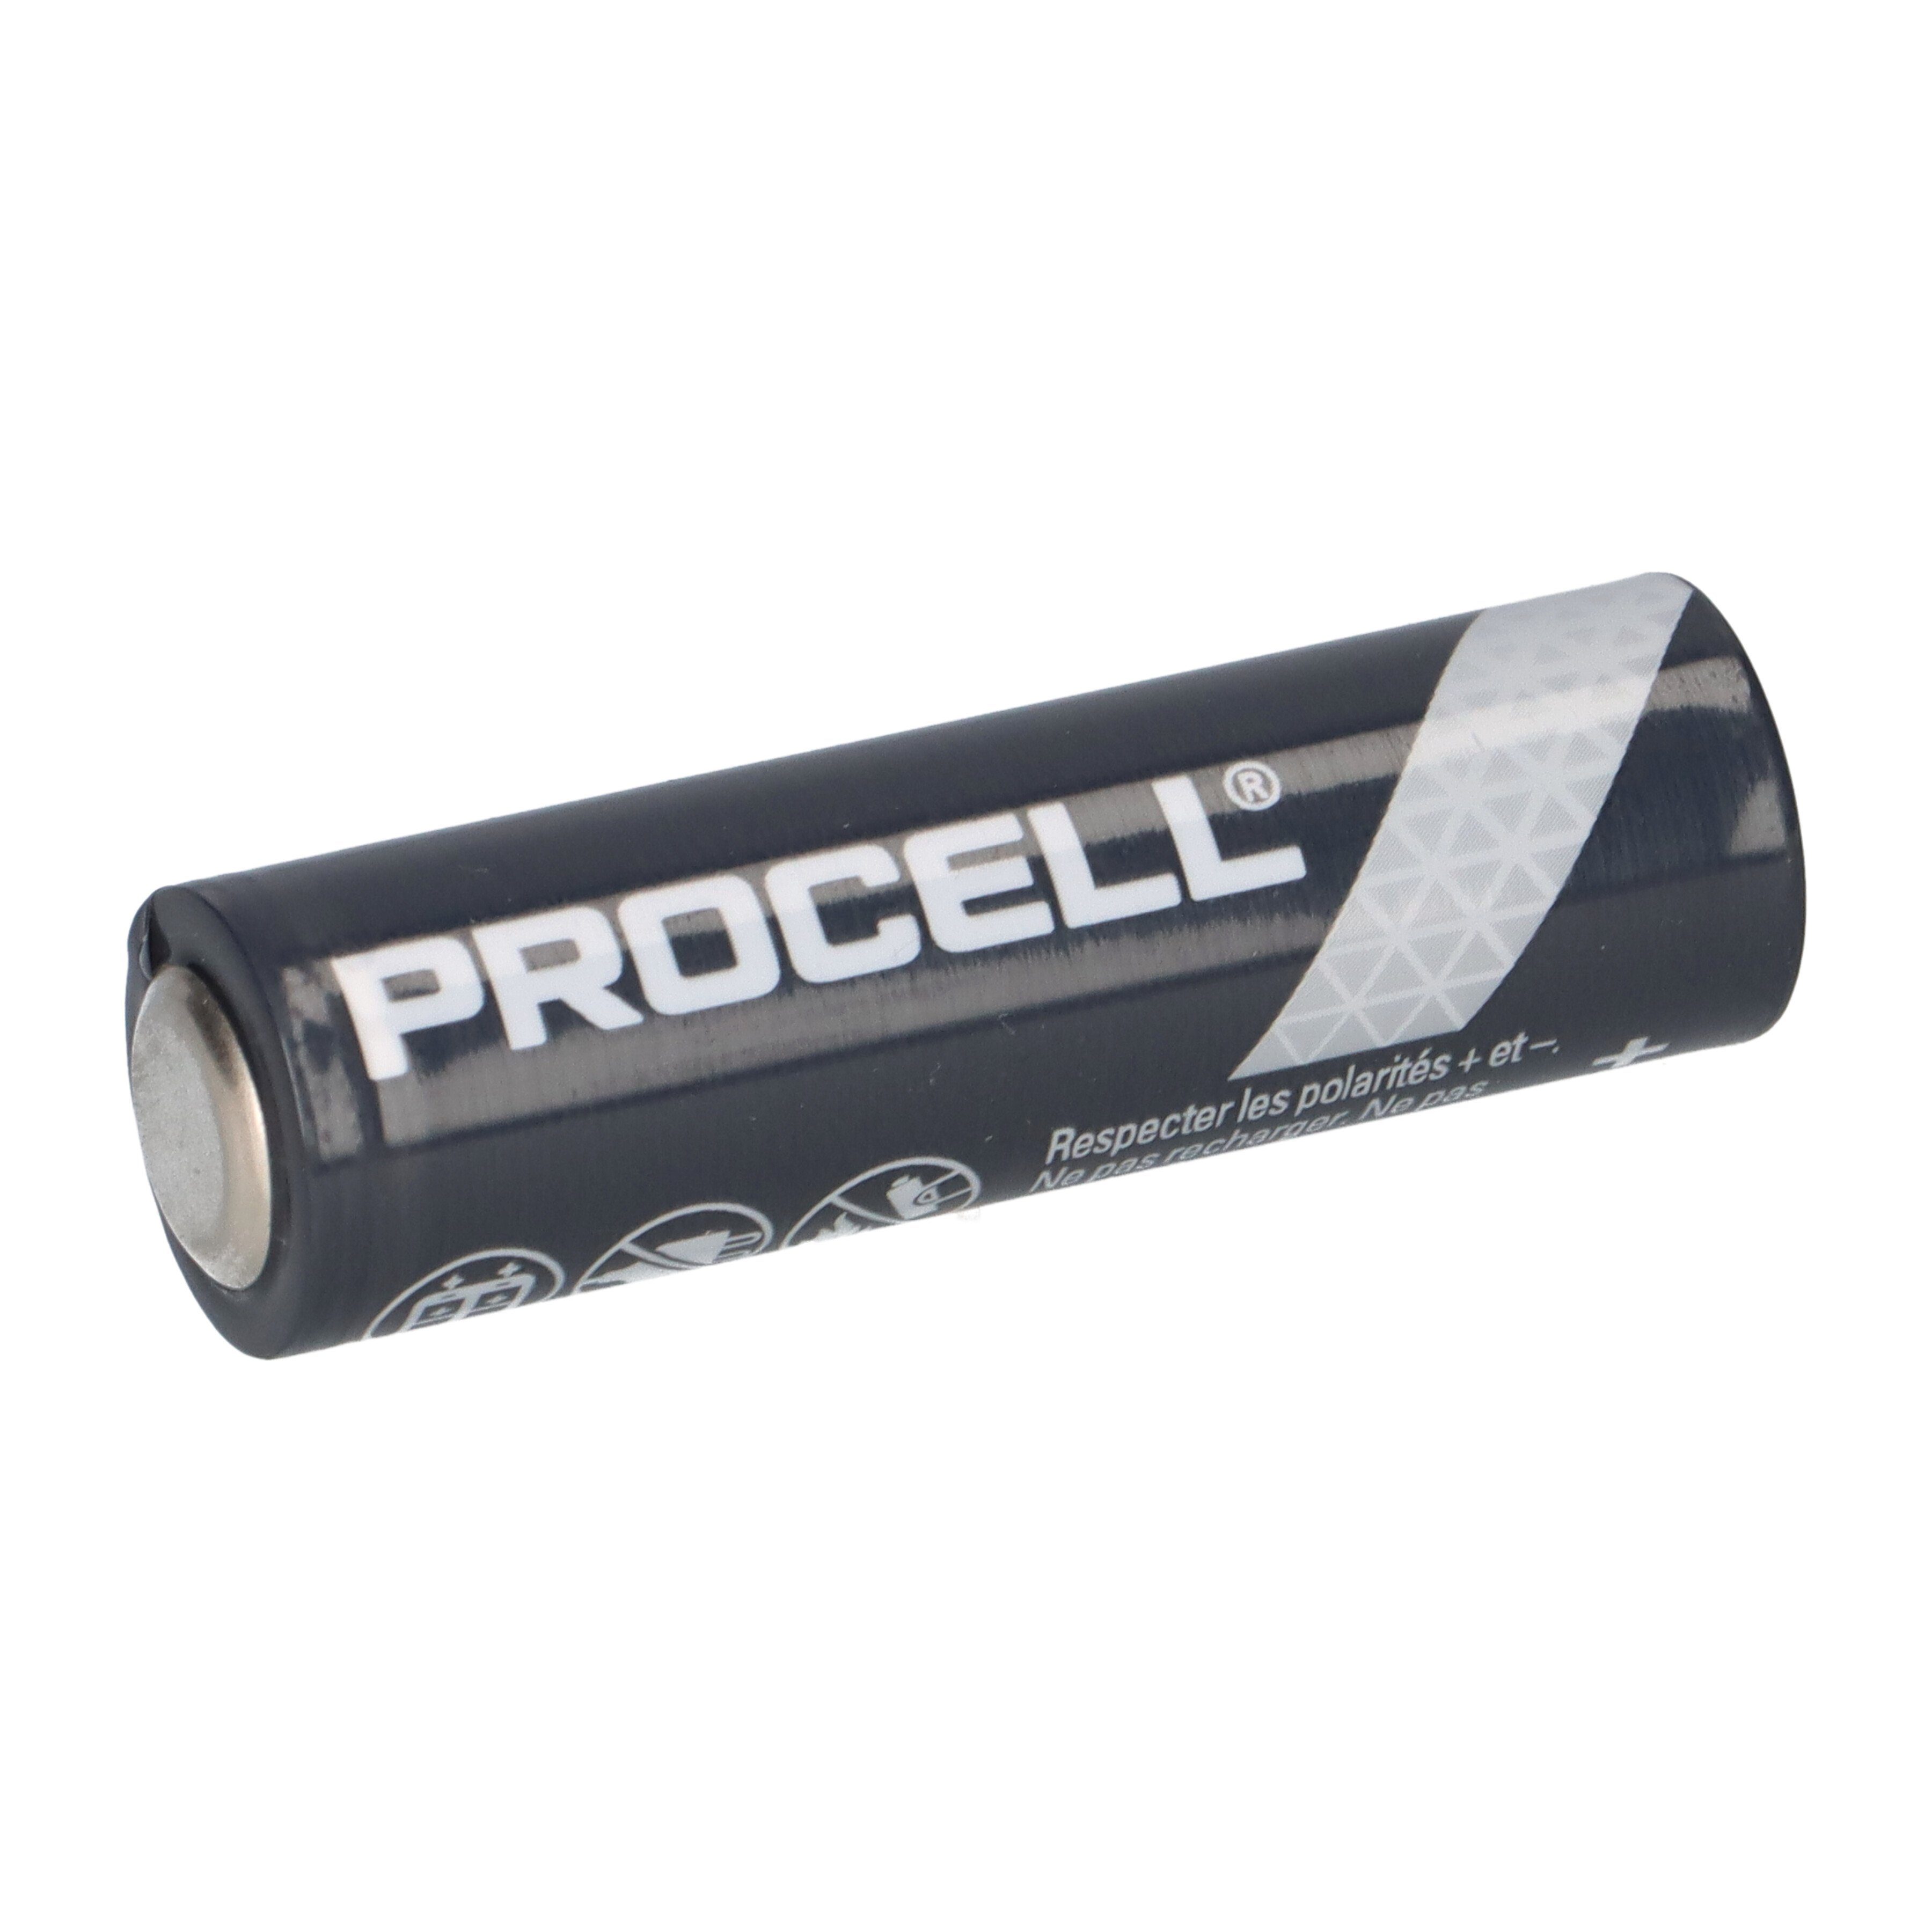 Batterien Mignon Procell AAA MN1500 10x MN2400 Micro Duracell AA 10x Batterie + 20x